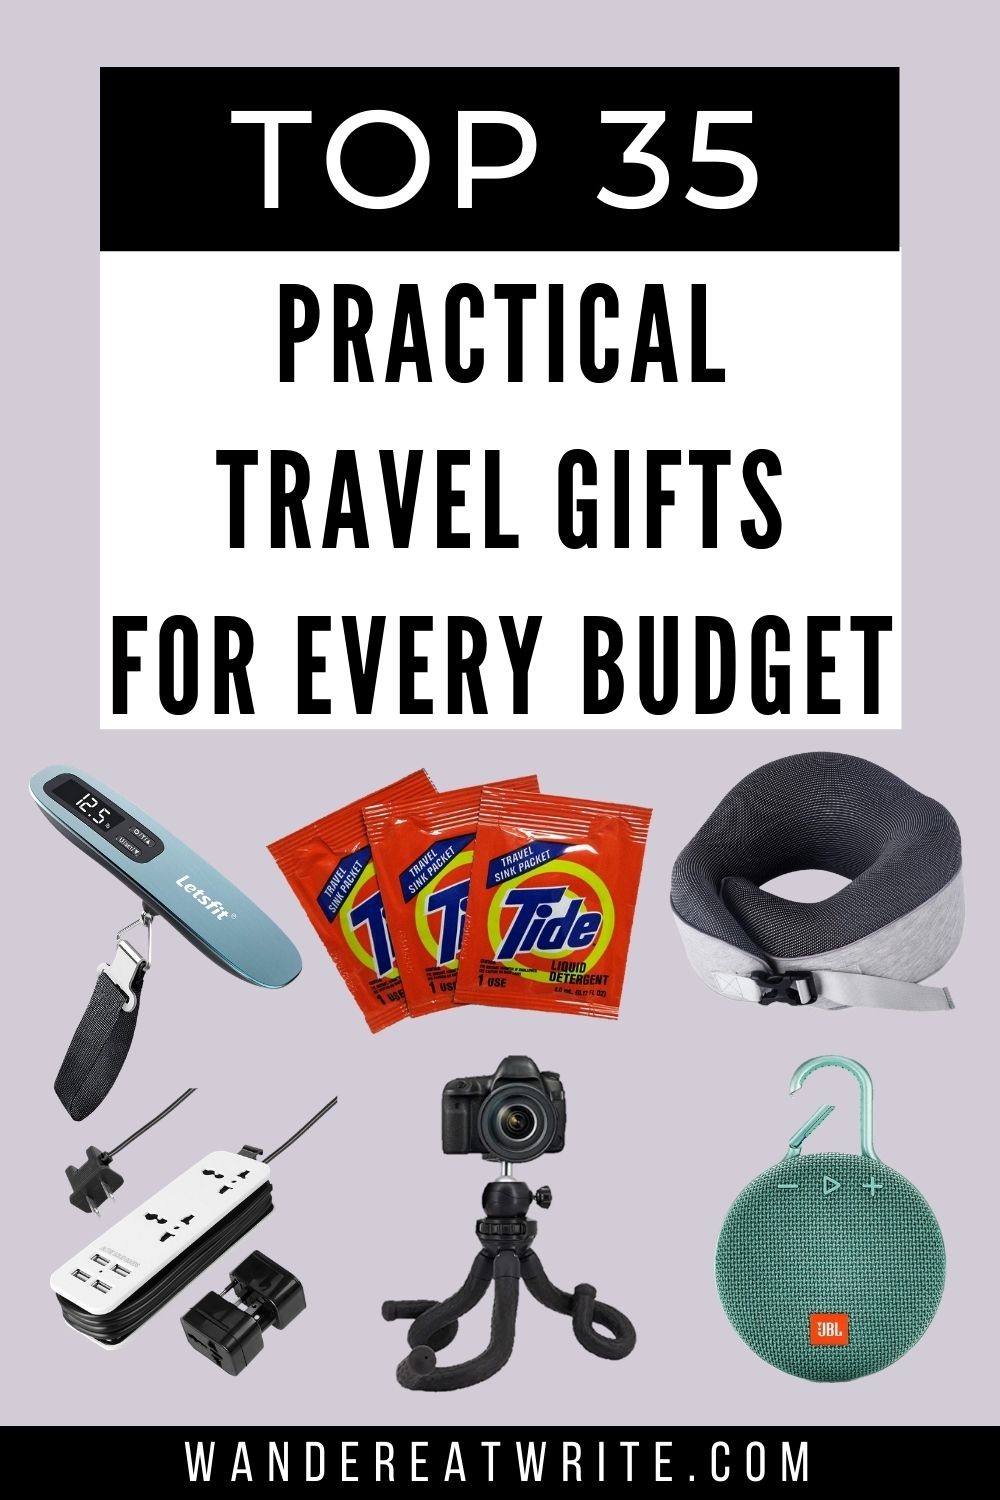 https://wandereatwrite.com/usheeche/2020/11/top-35-practical-travel-gifts-for-every-budget-pins.jpg